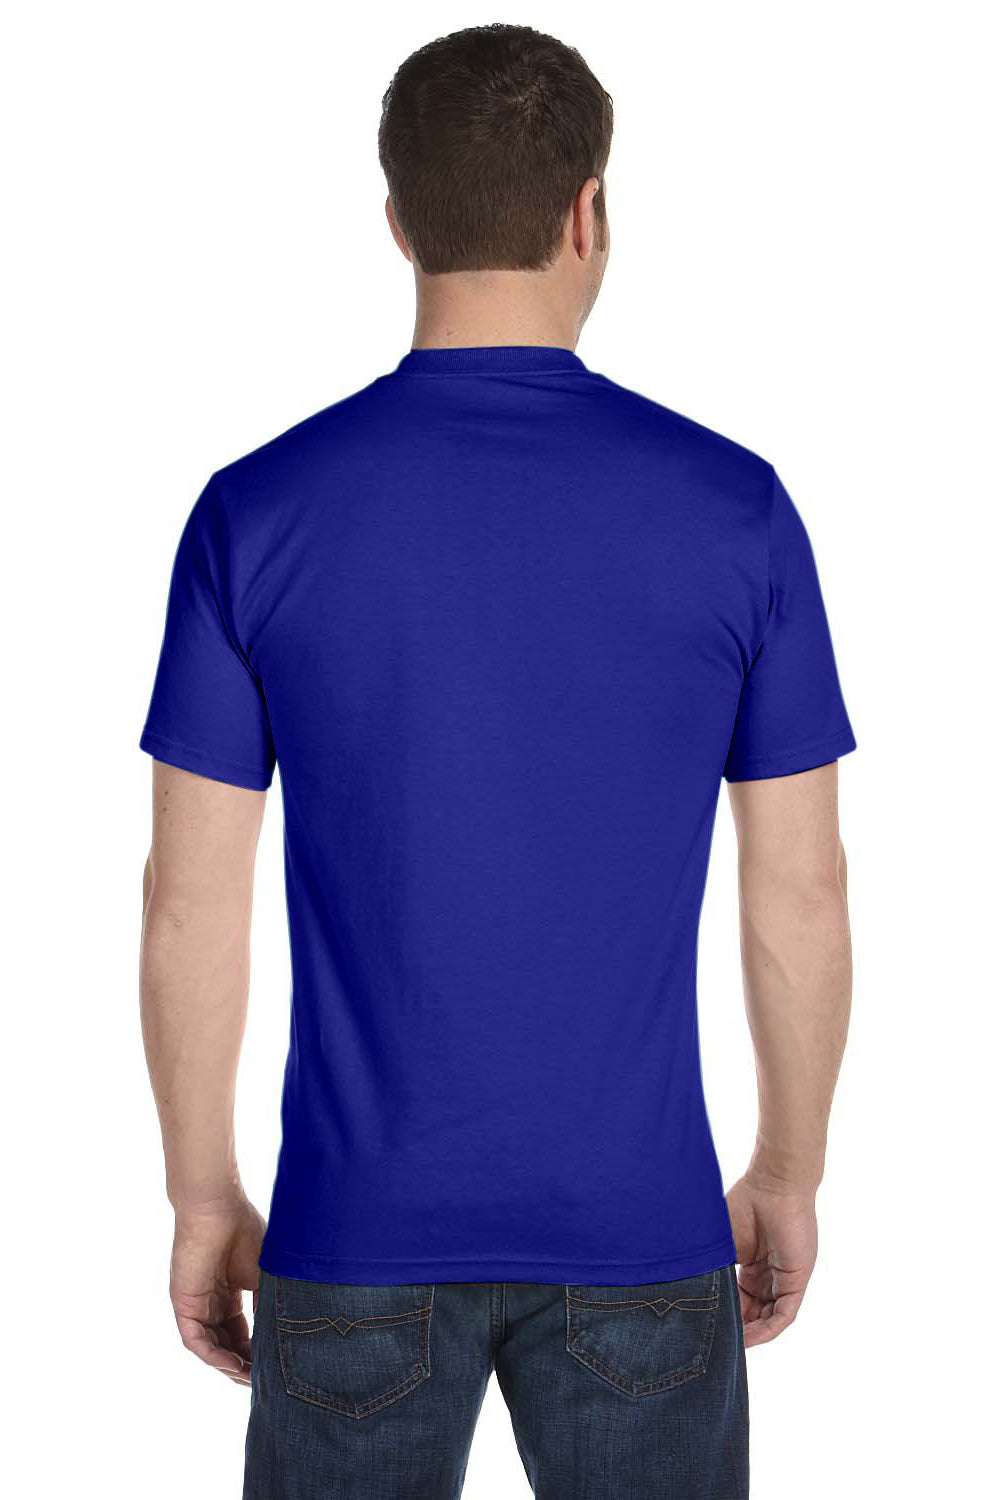 Gildan G800 Mens DryBlend Moisture Wicking Short Sleeve Crewneck T-Shirt Sport Royal Blue Back